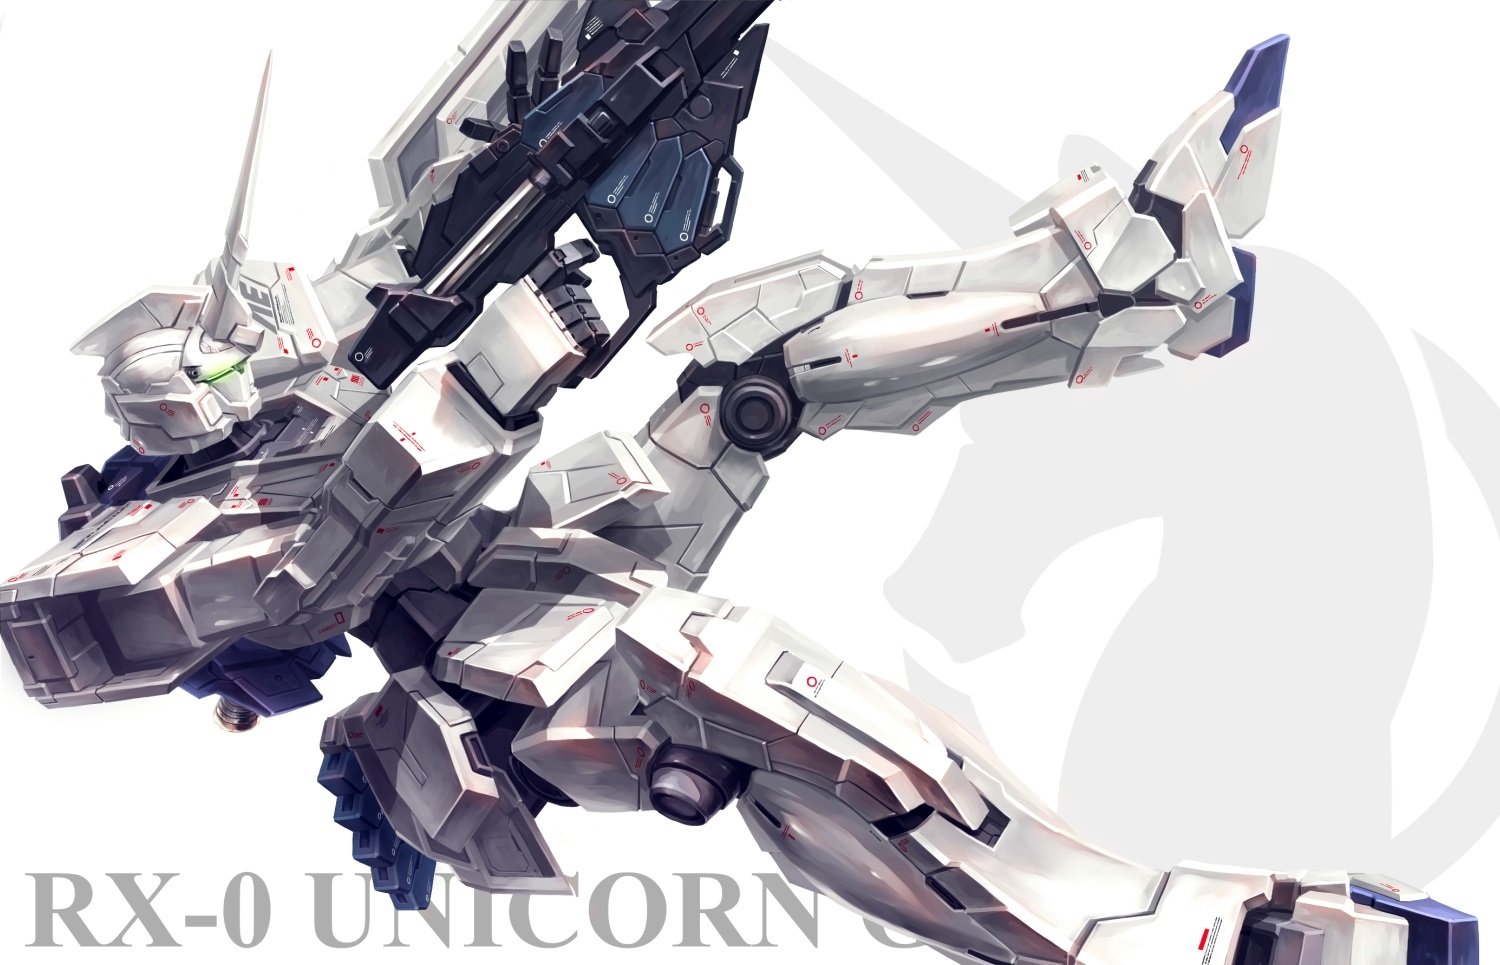 Mobile Suit Gundam wallpaper hd free download